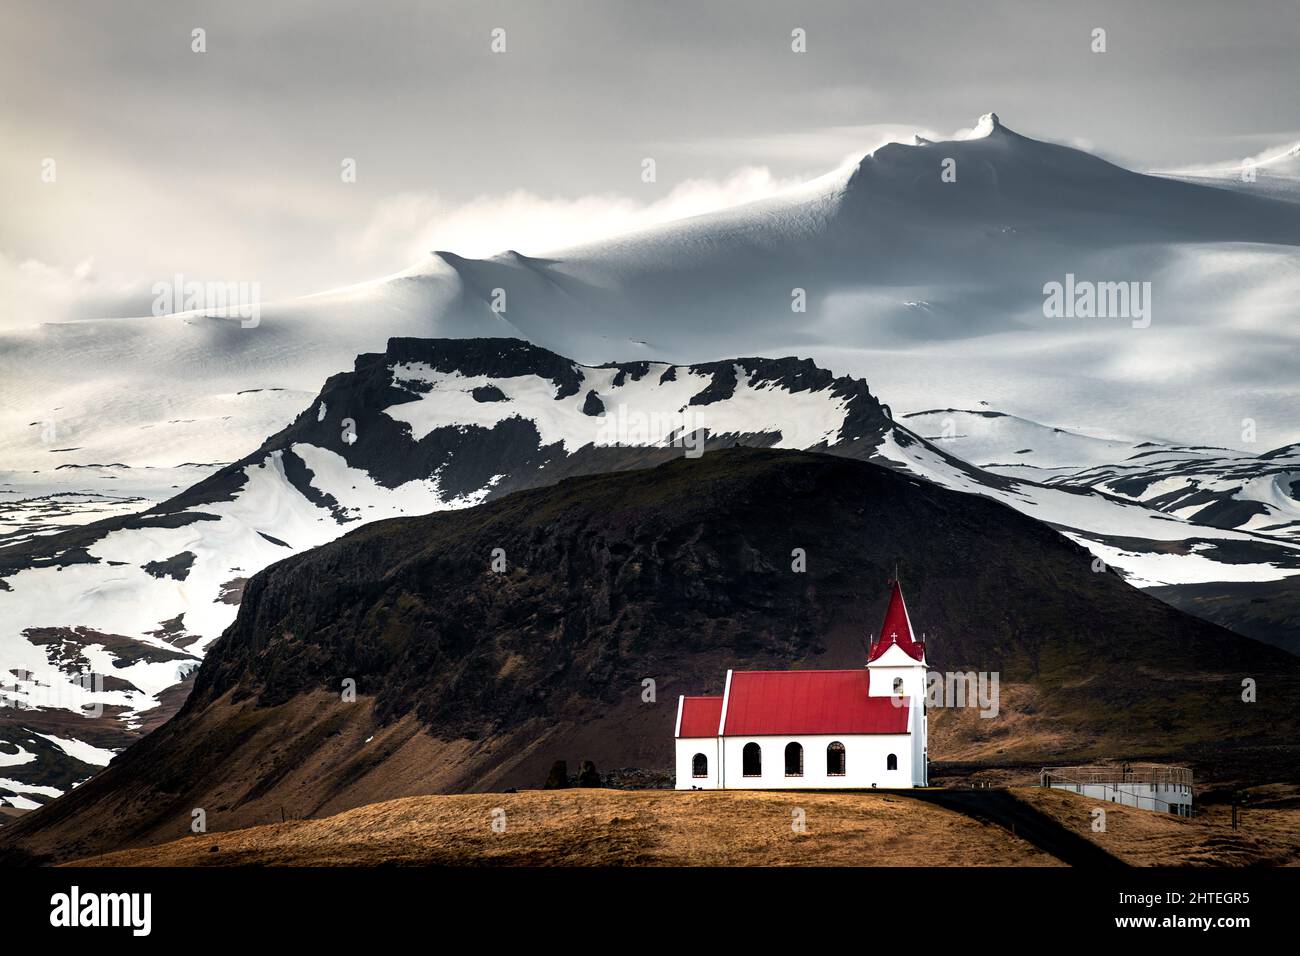 Schöne Injaldsholkirkja am Fuße des Snaefellsjökull Gletschers. Stockfoto